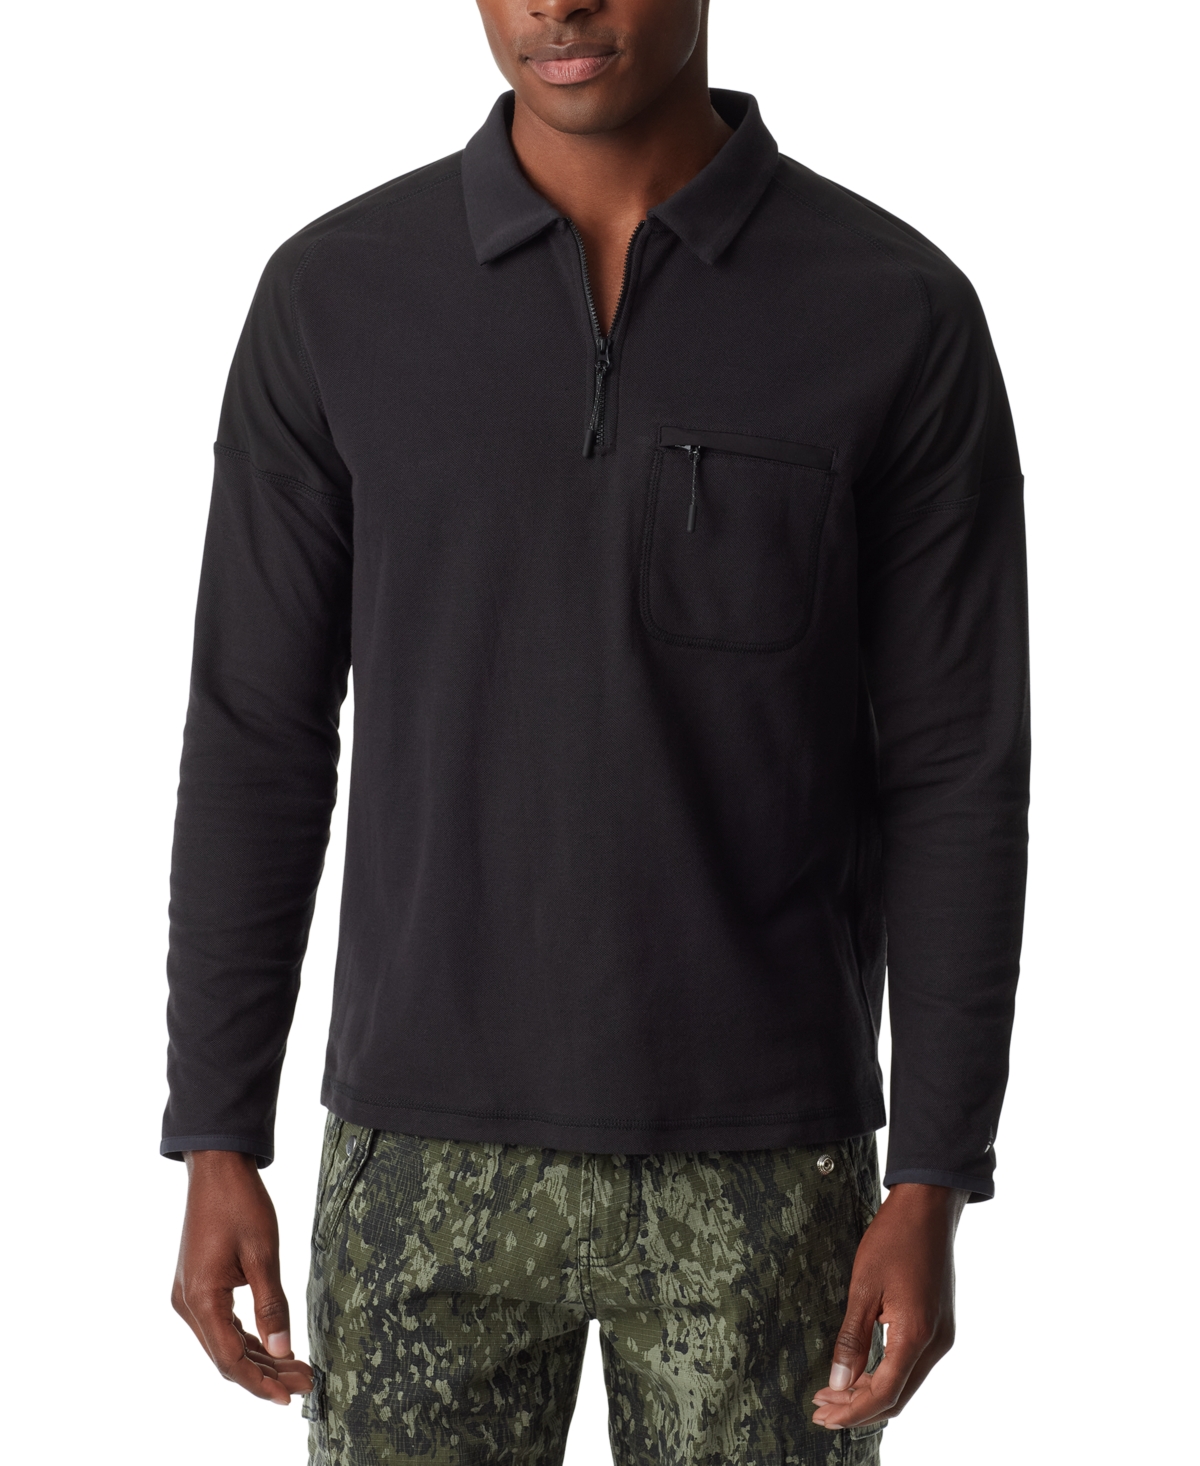 Men's Long-Sleeve Pique Polo Shirt - Tawny Port